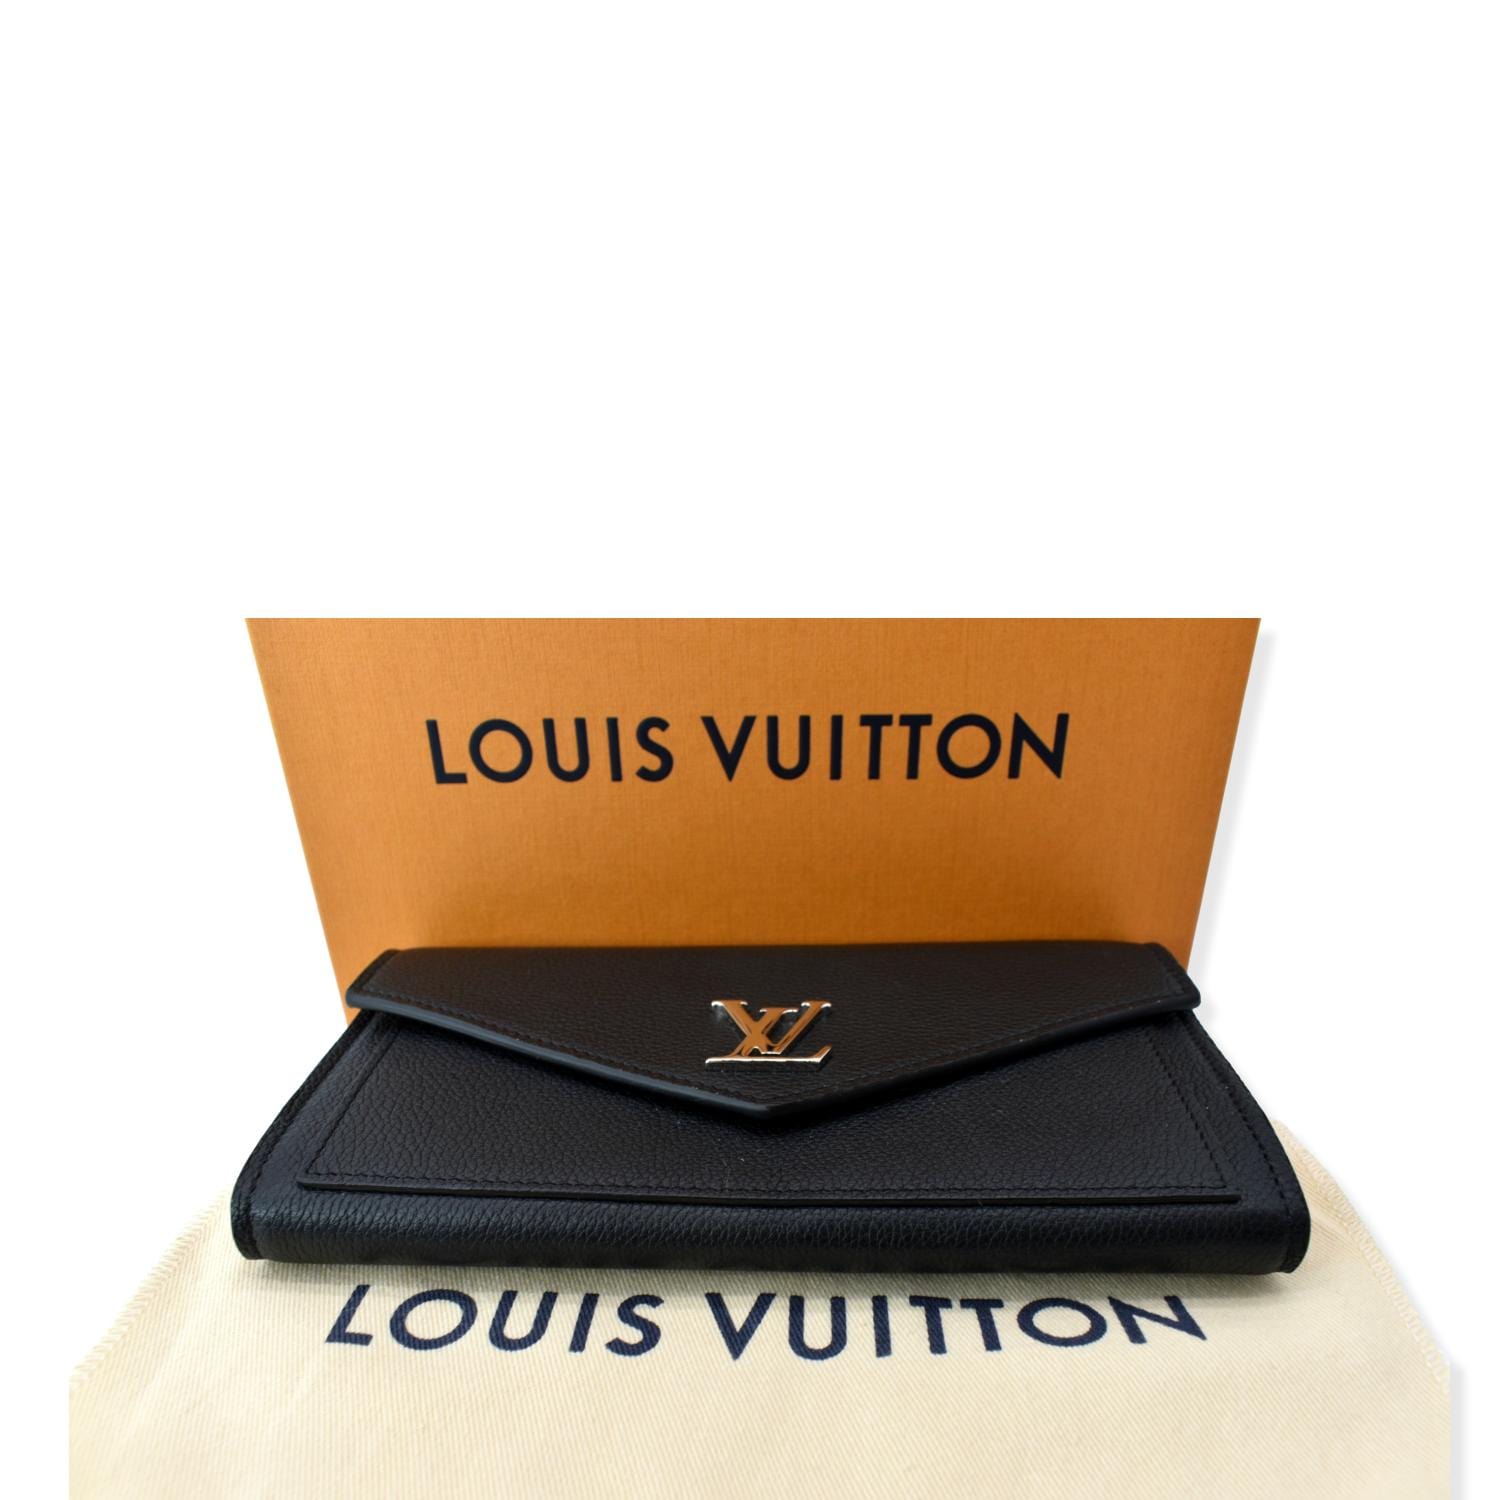 Louis Vuitton - Authenticated Mylockme Handbag - Leather Black Plain for Women, Very Good Condition